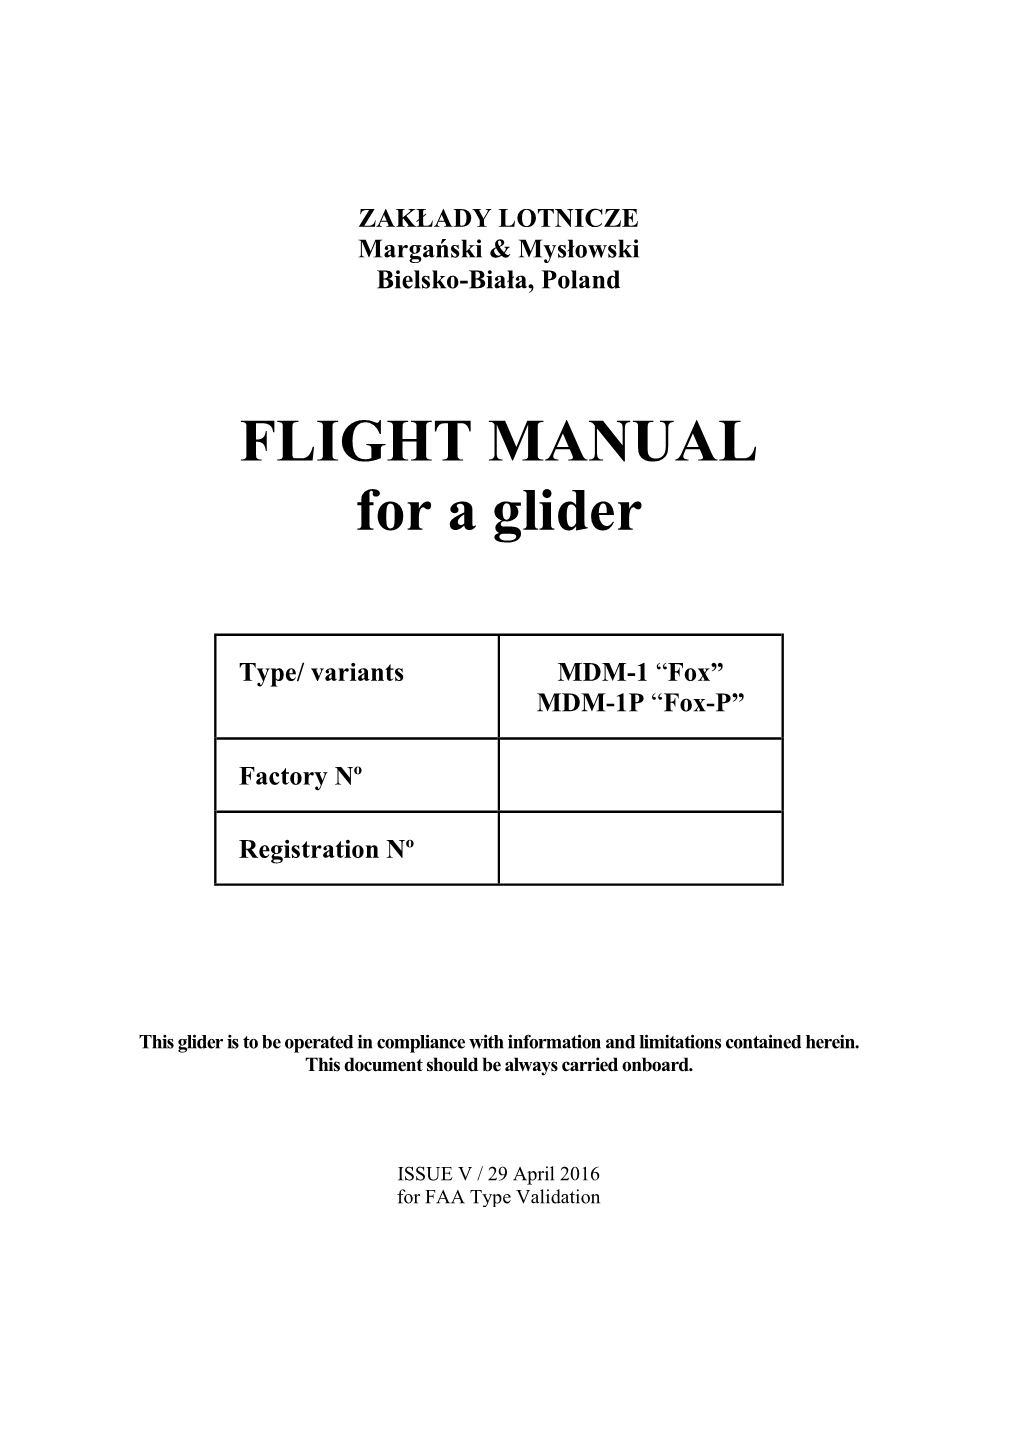 FLIGHT MANUAL for a Glider